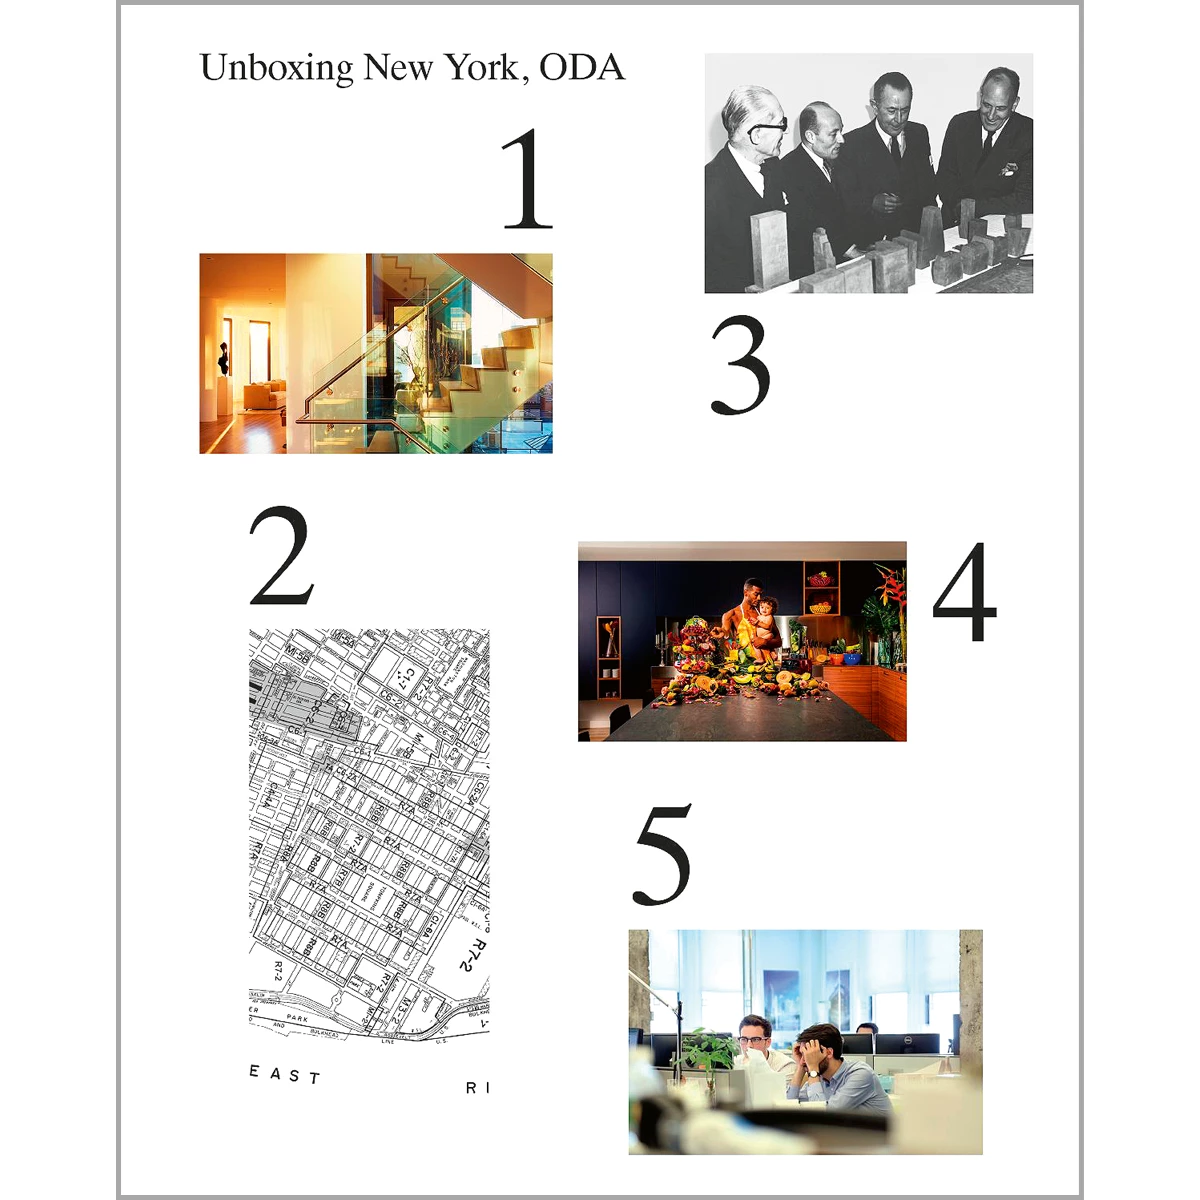 Unboxing New York, ODA